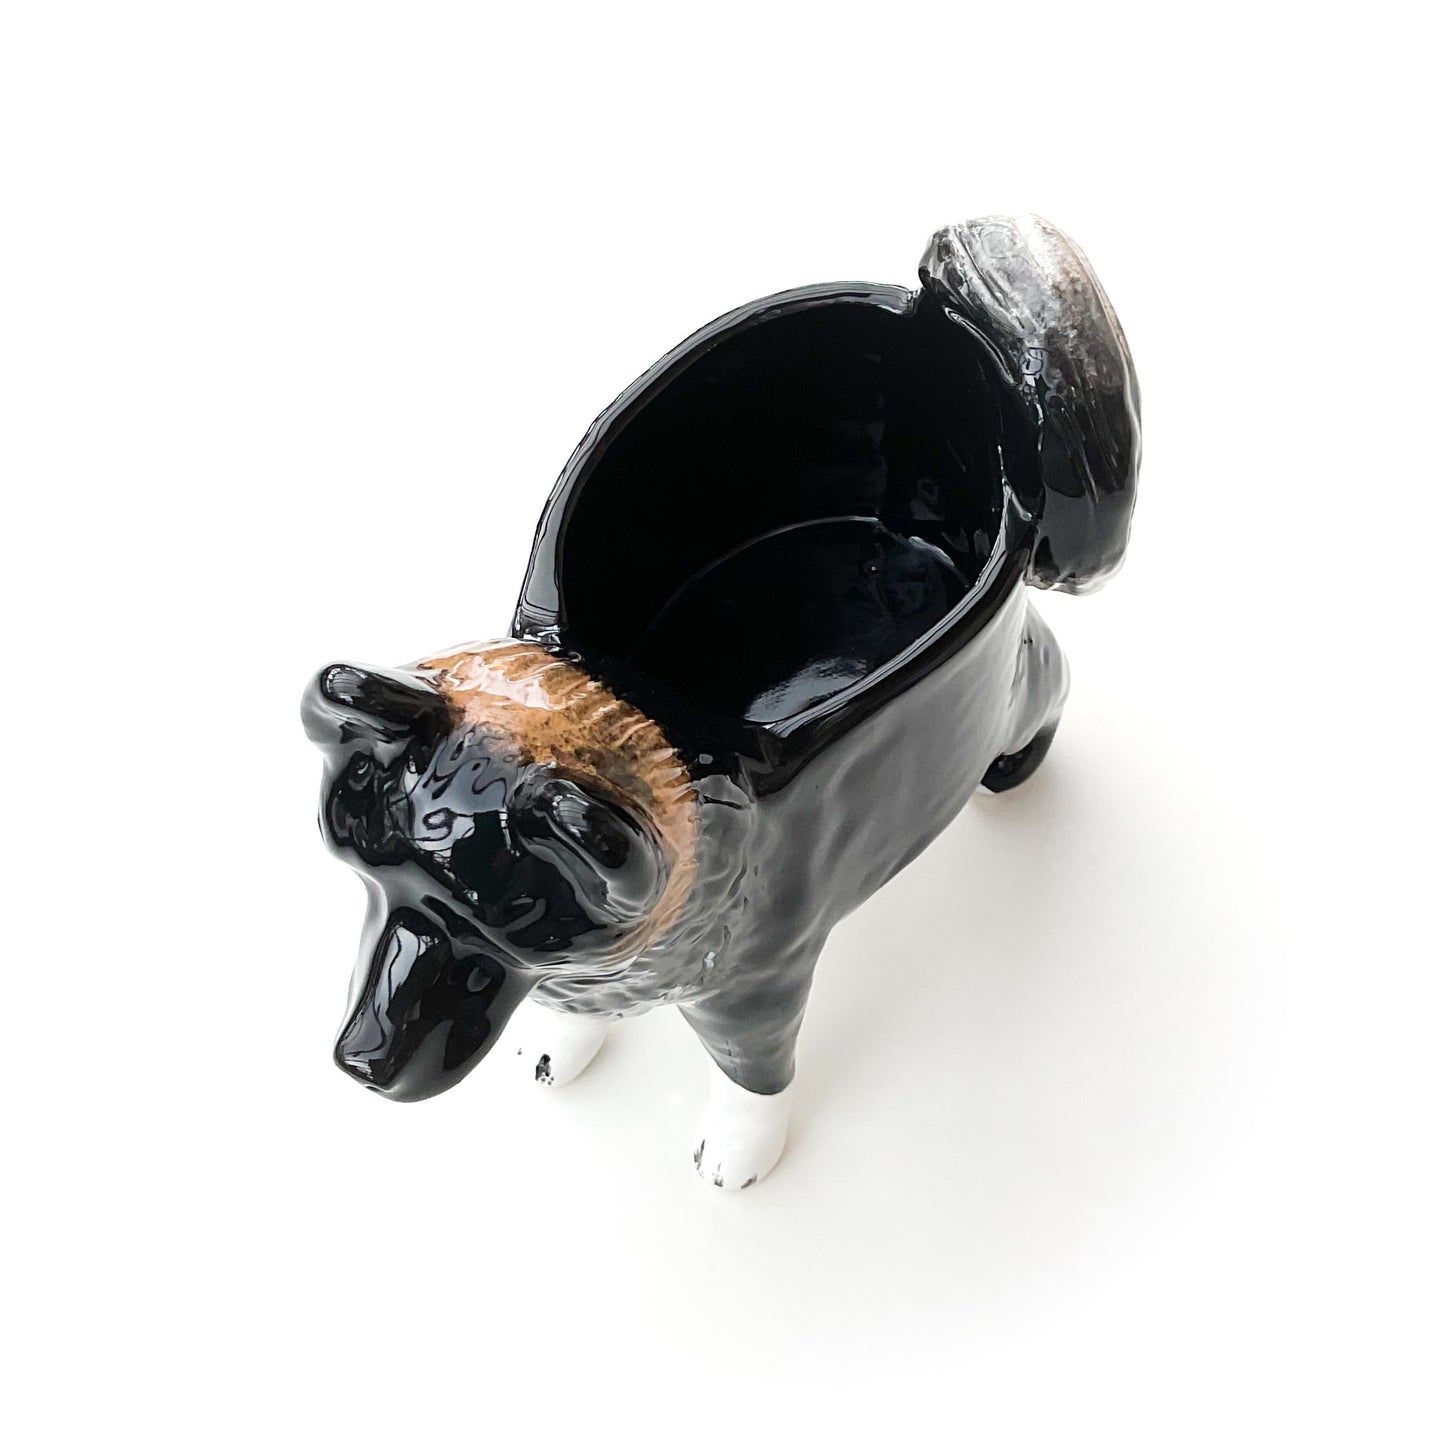 American Akita Dog Planter - Ceramic Dog Plant Pot